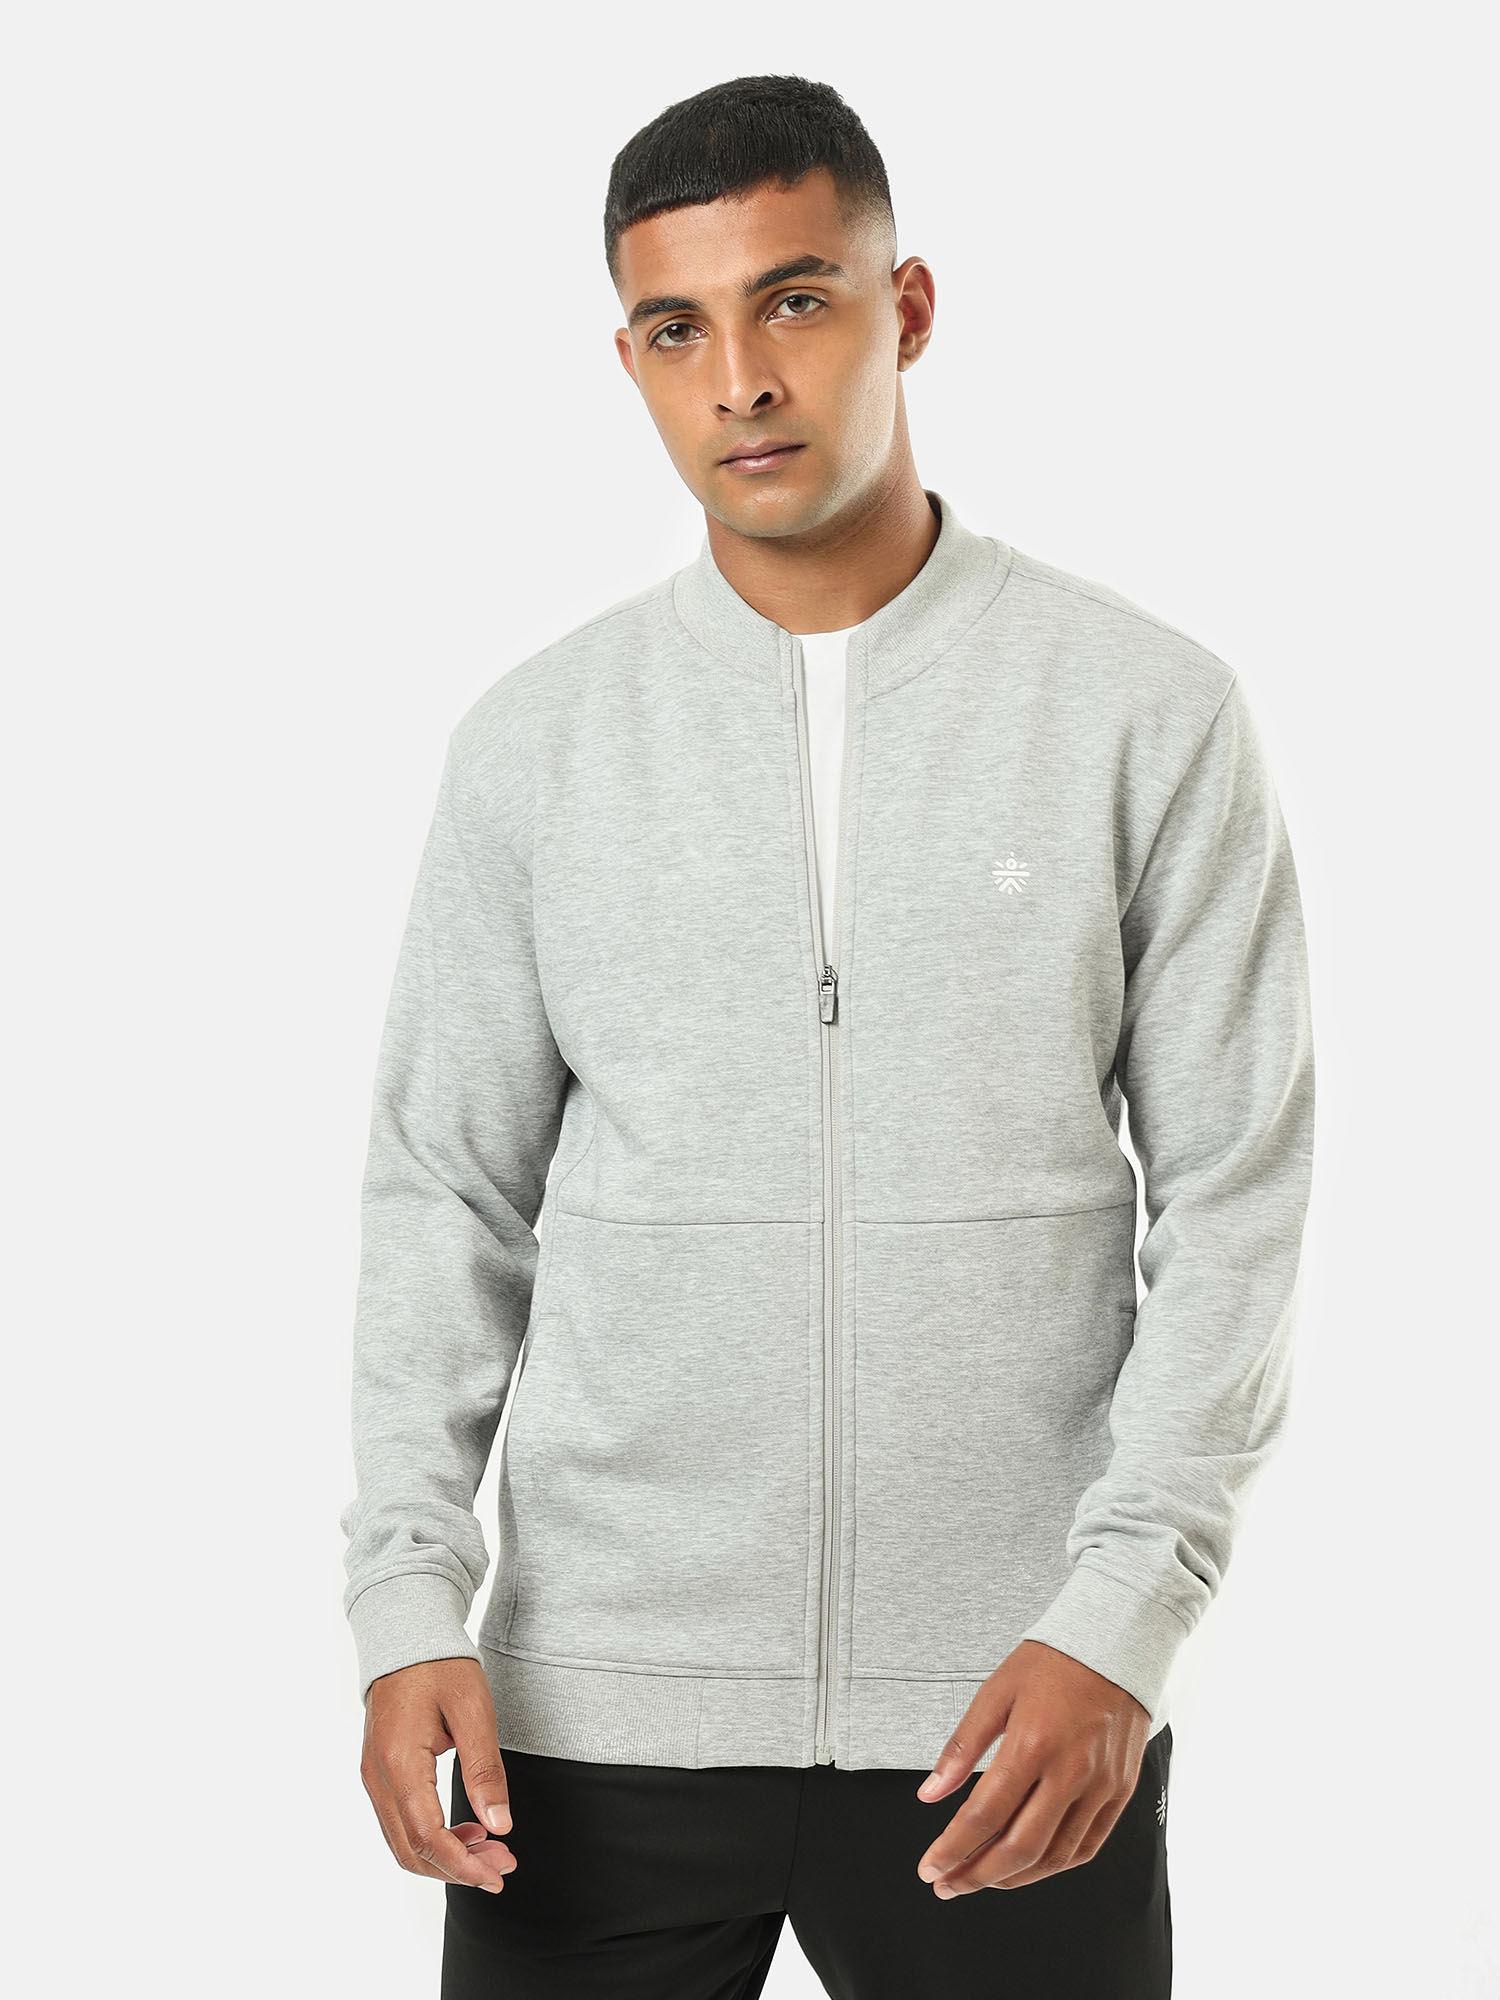 mens grey panelled zipper sweatshirt